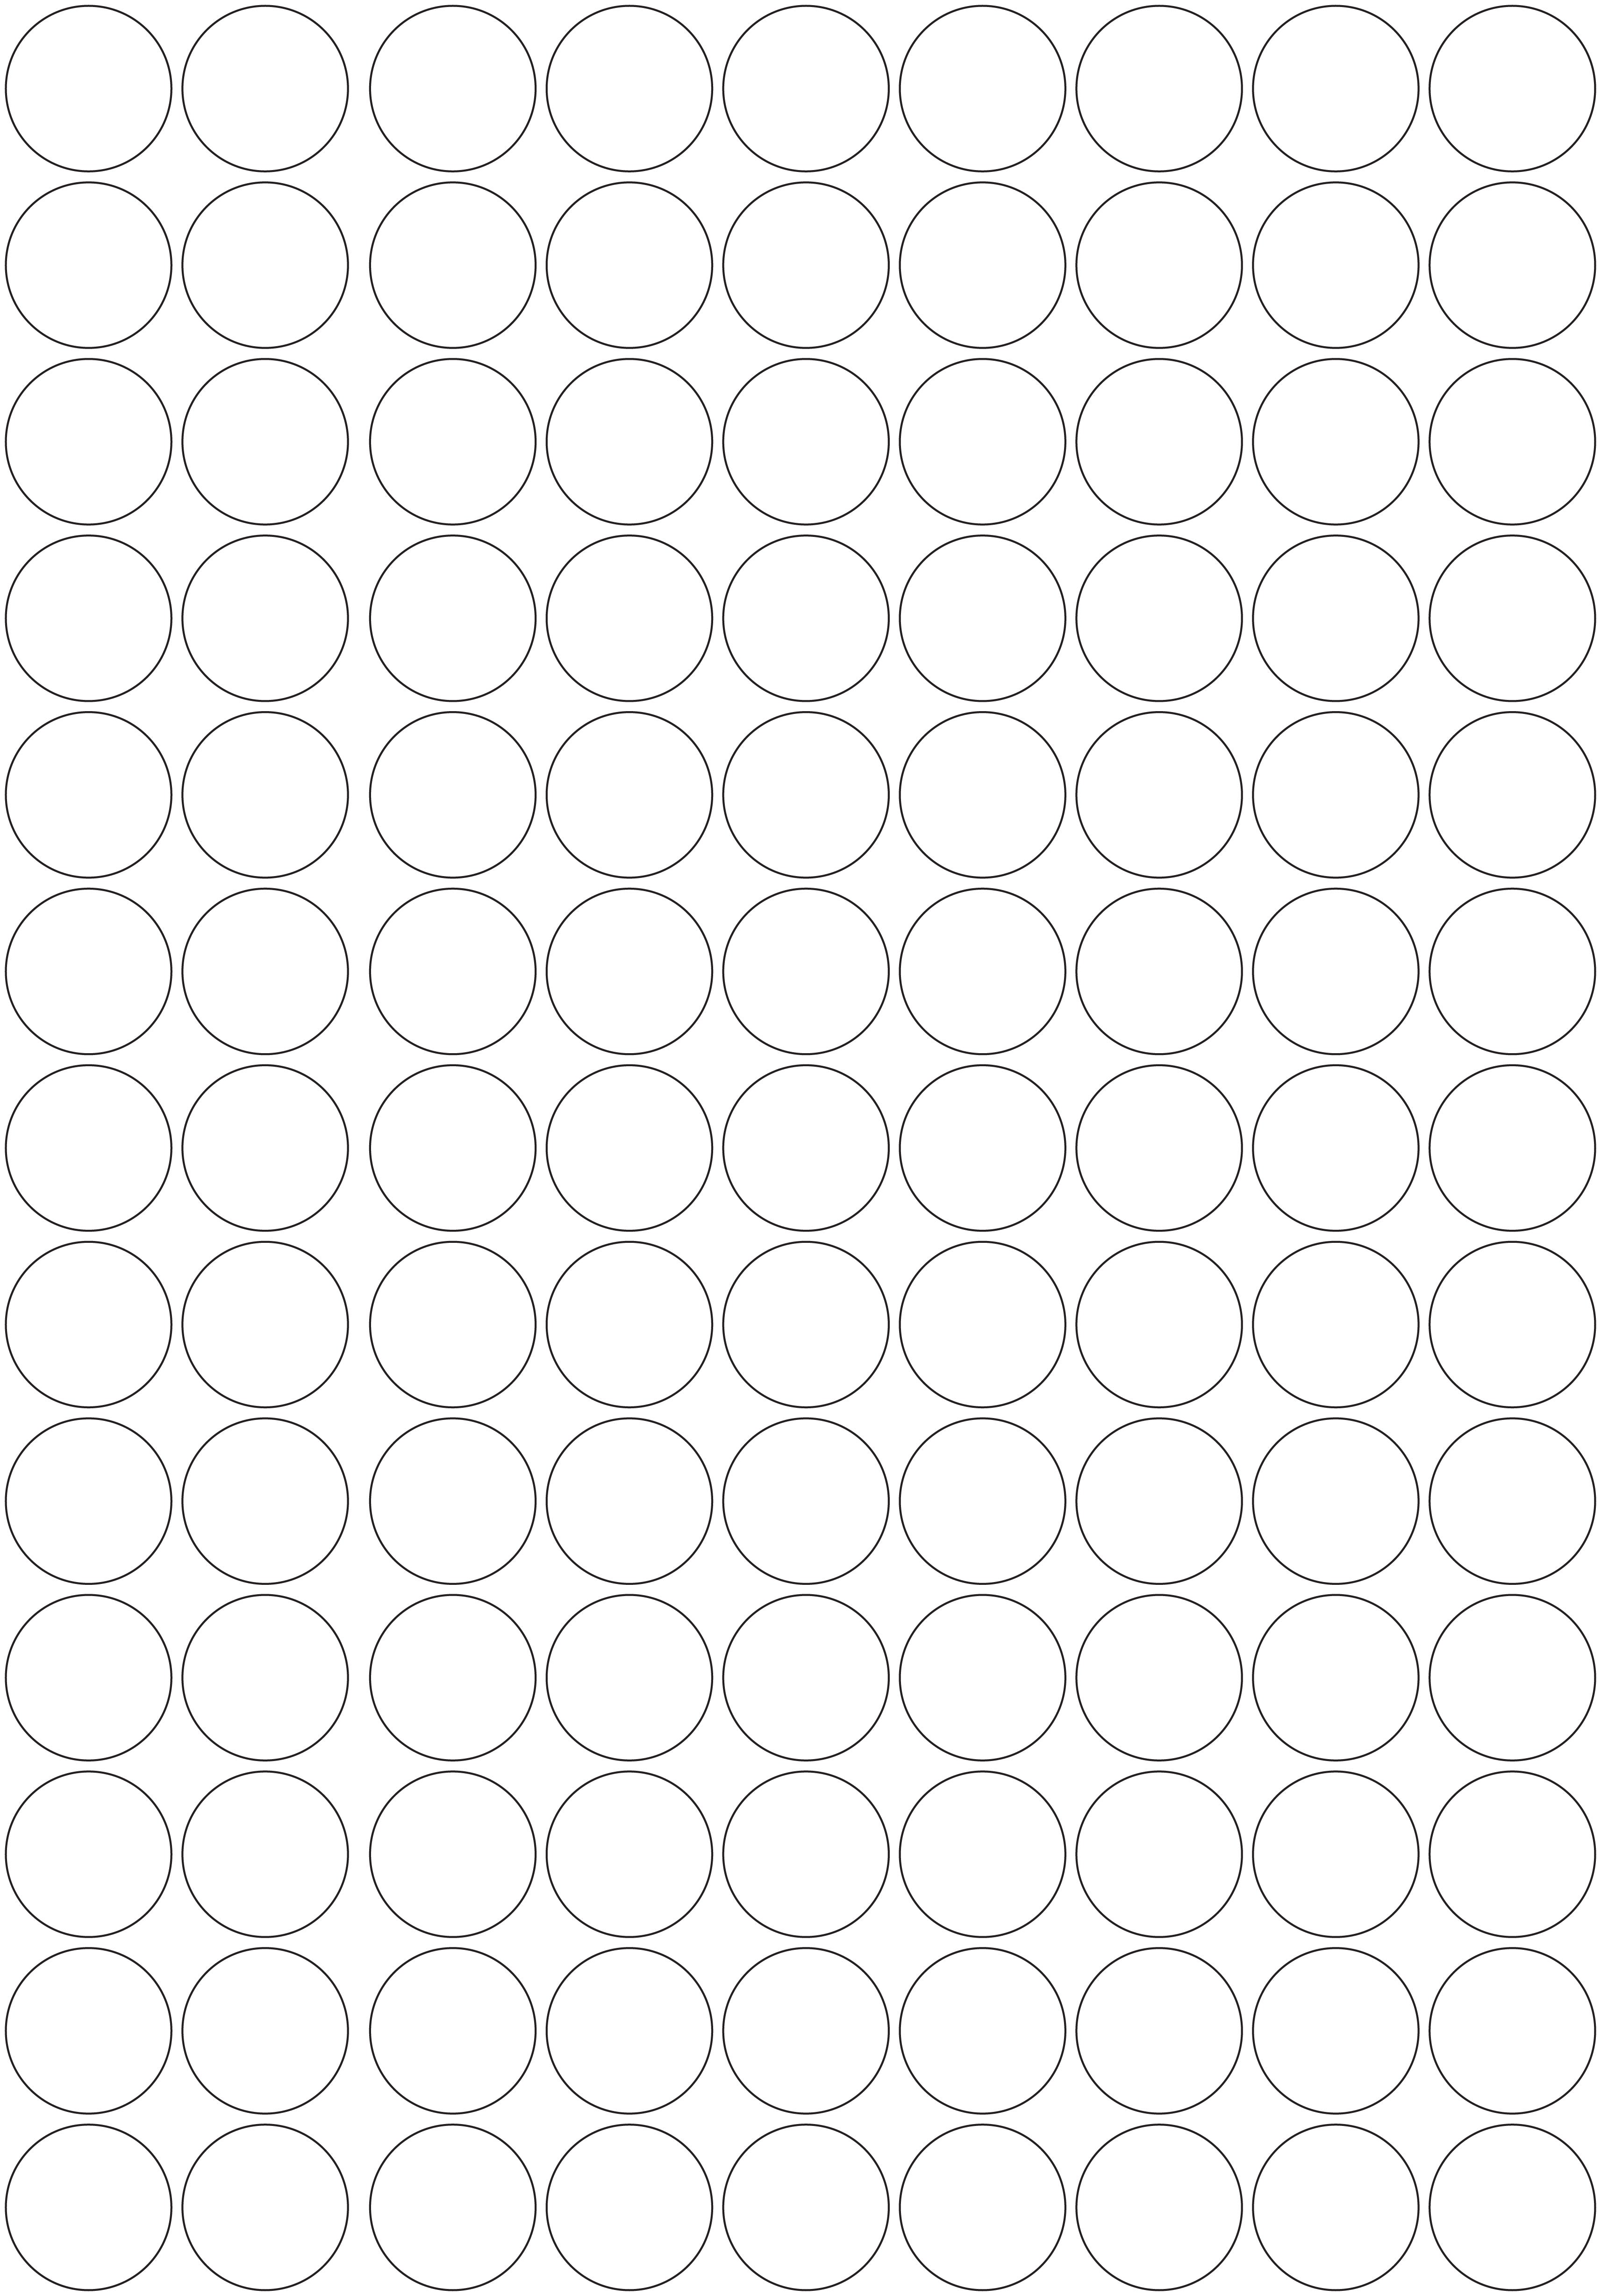 3M White/Silver Reflective Circles - A3 Sheet 30mm Circles